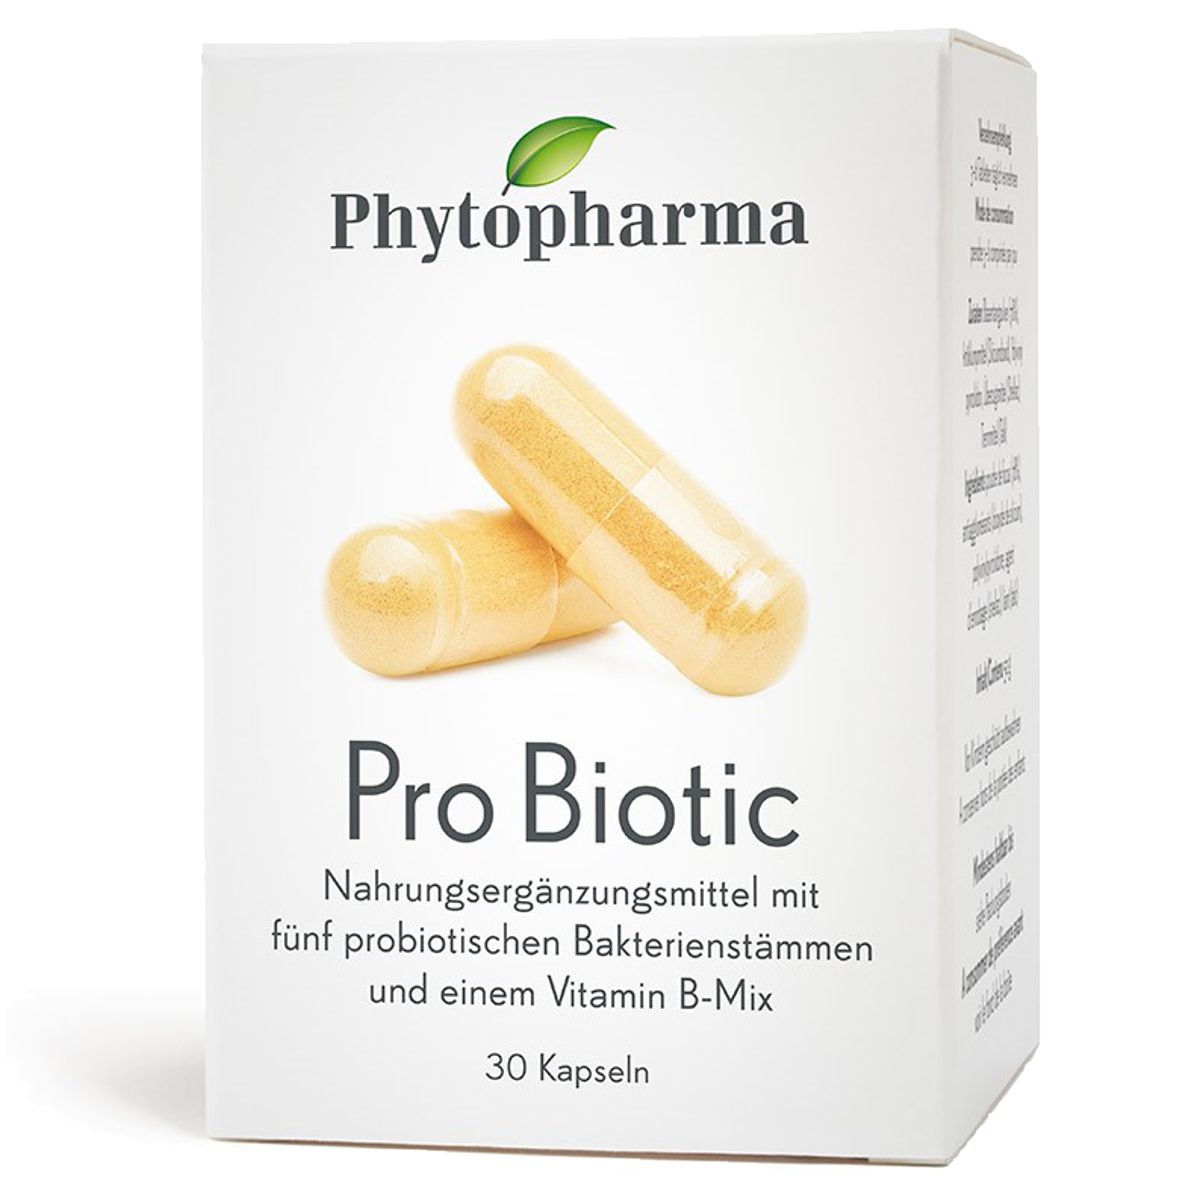 Phytopharma_Pro_Biotic_Kapseln_online_kaufen